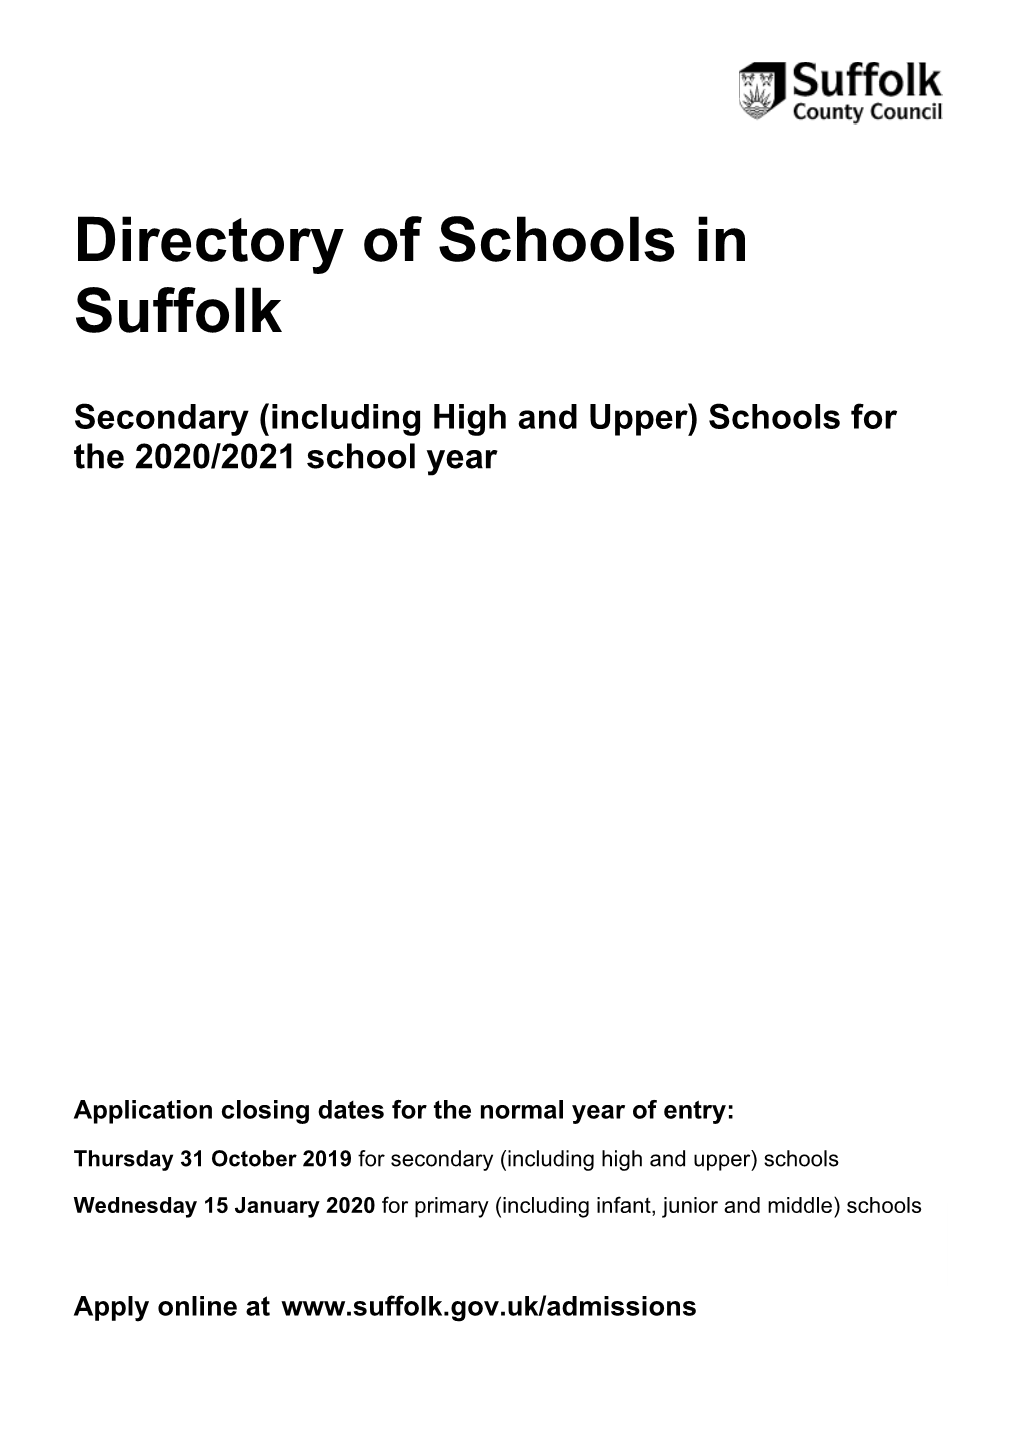 Directory of Schools in Suffolk